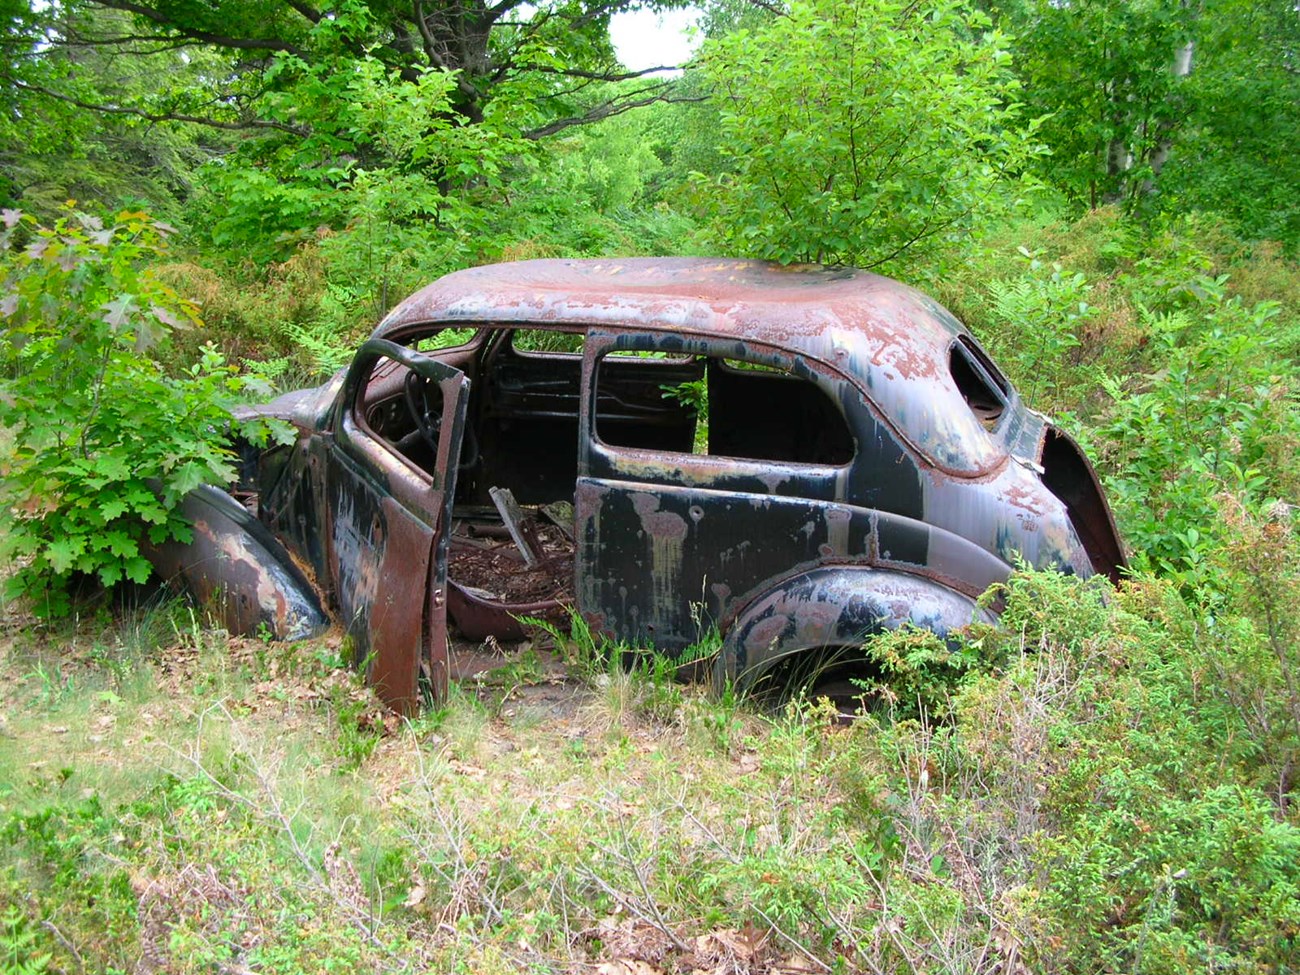 Rusted old car peeking from brush